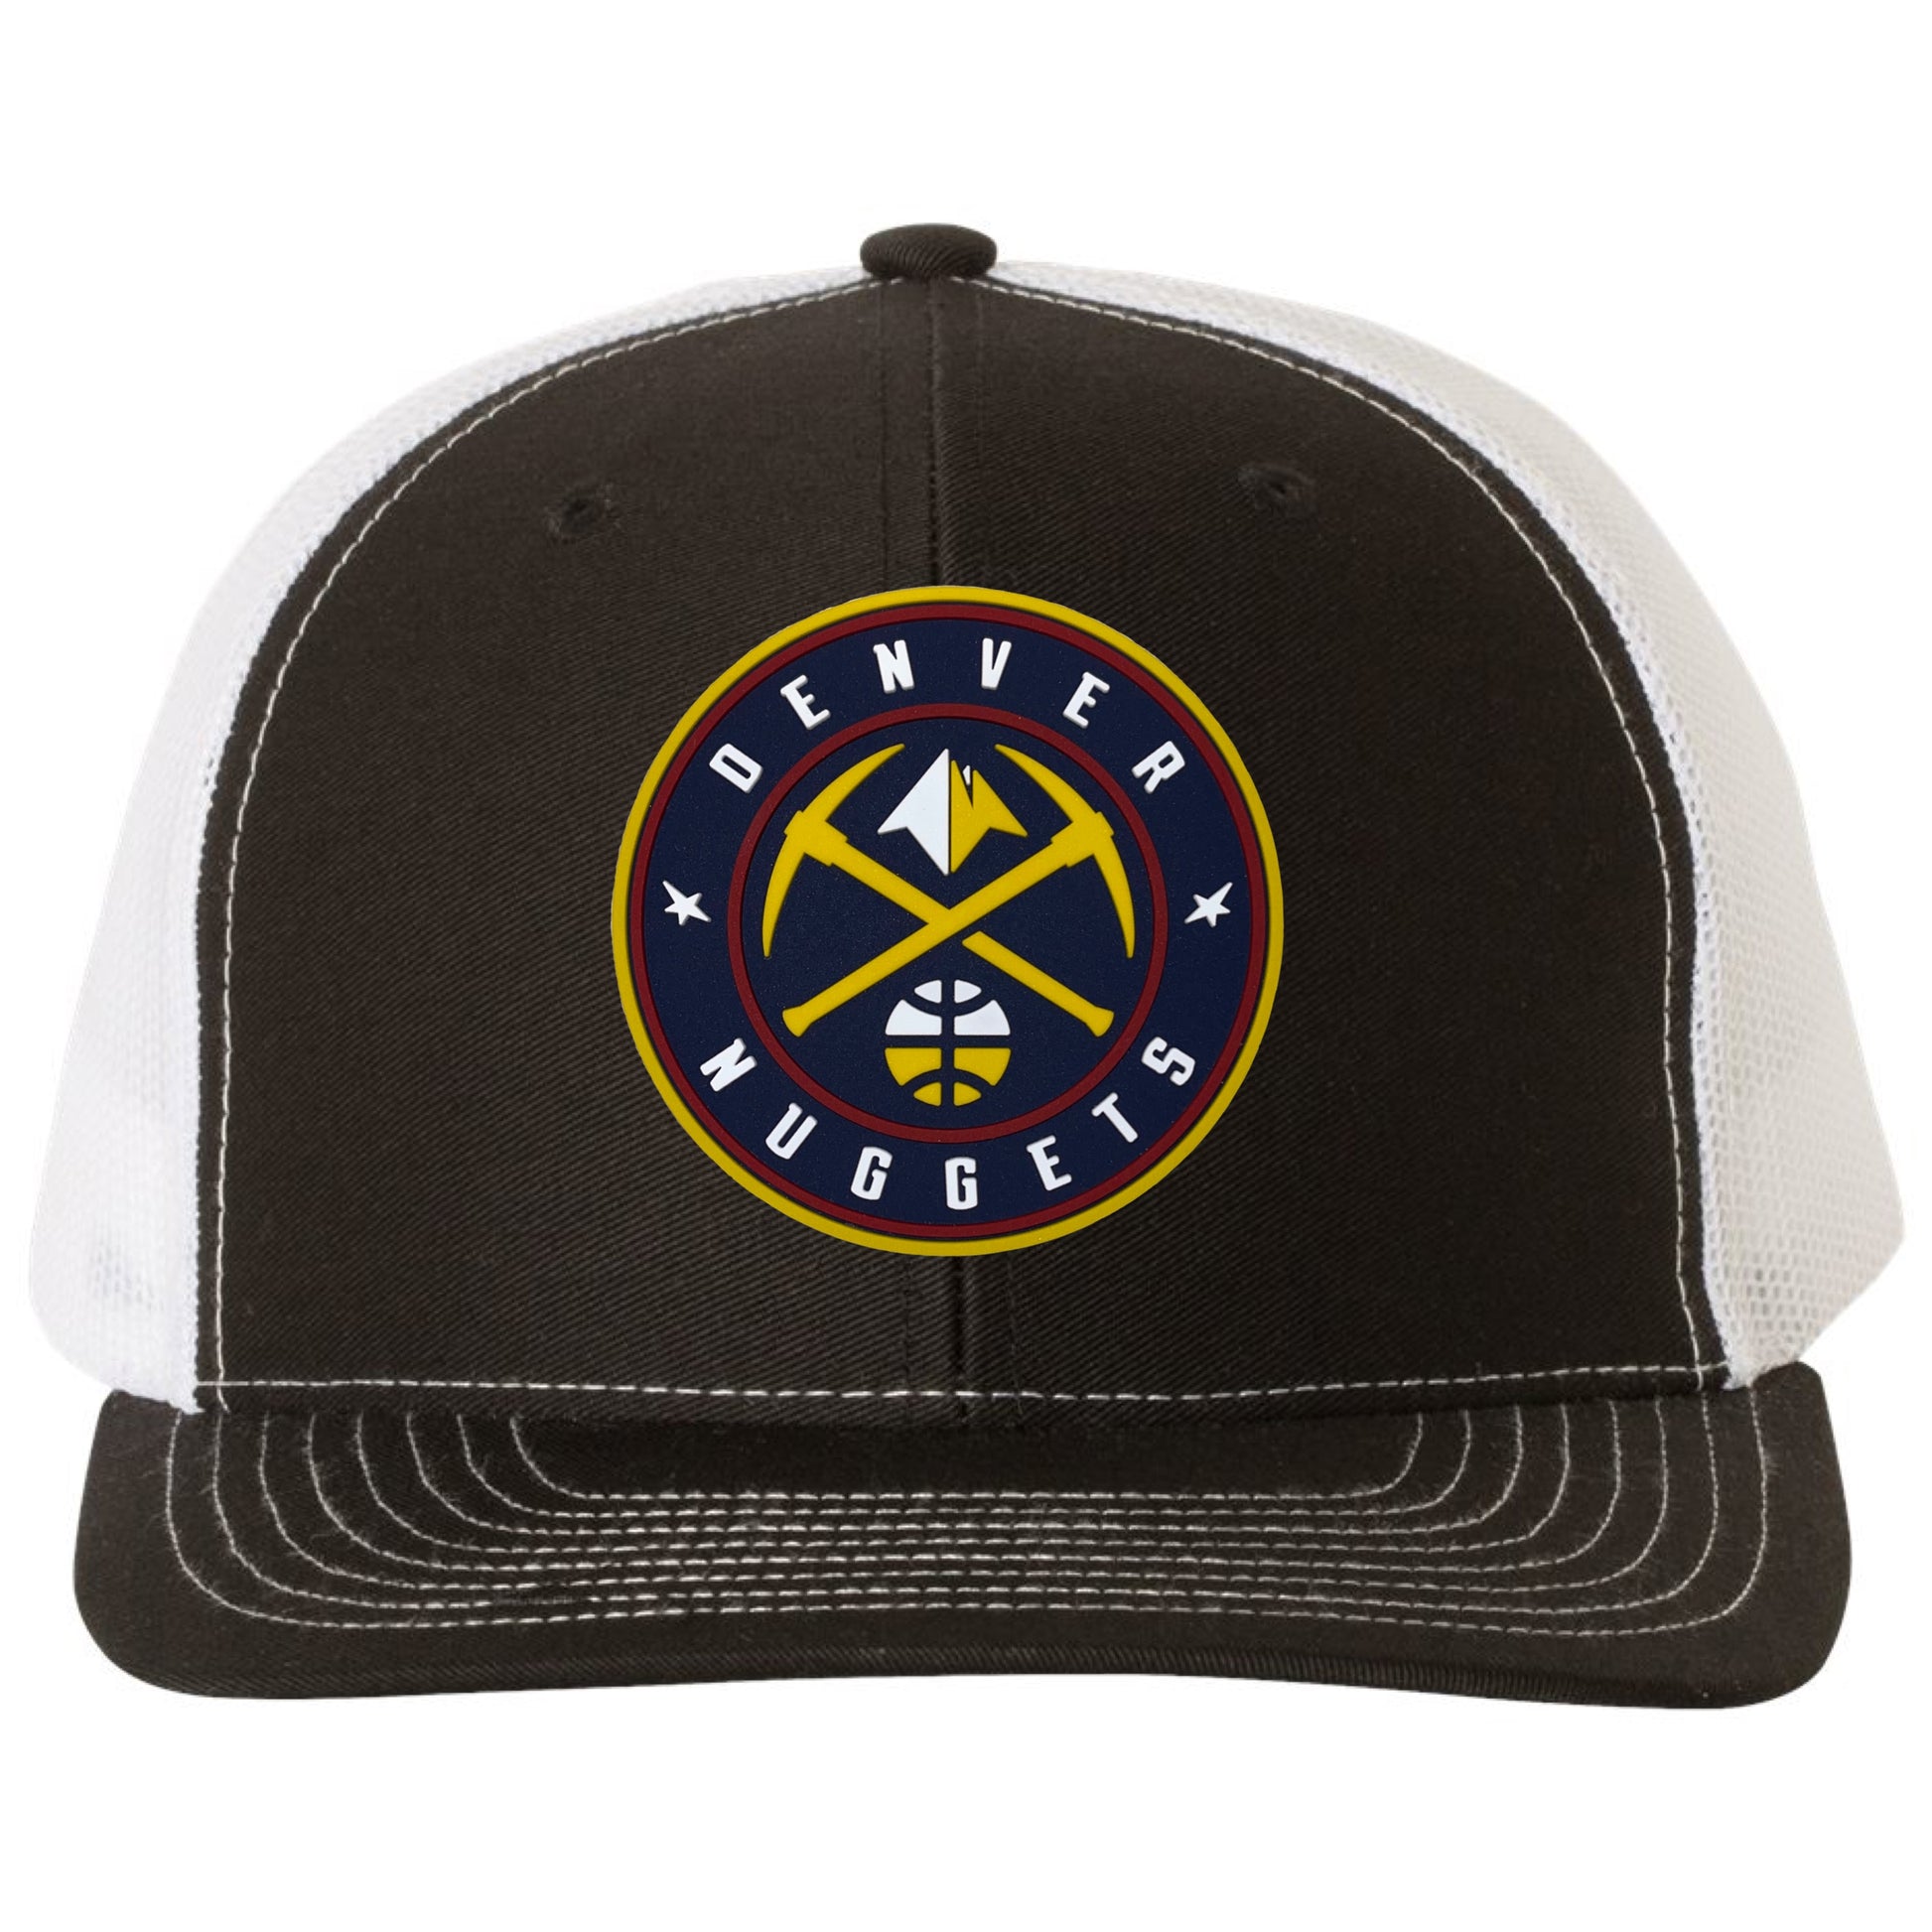 Denver Nuggets 3D Snapback Trucker Hat- Black/ White - Ten Gallon Hat Co.